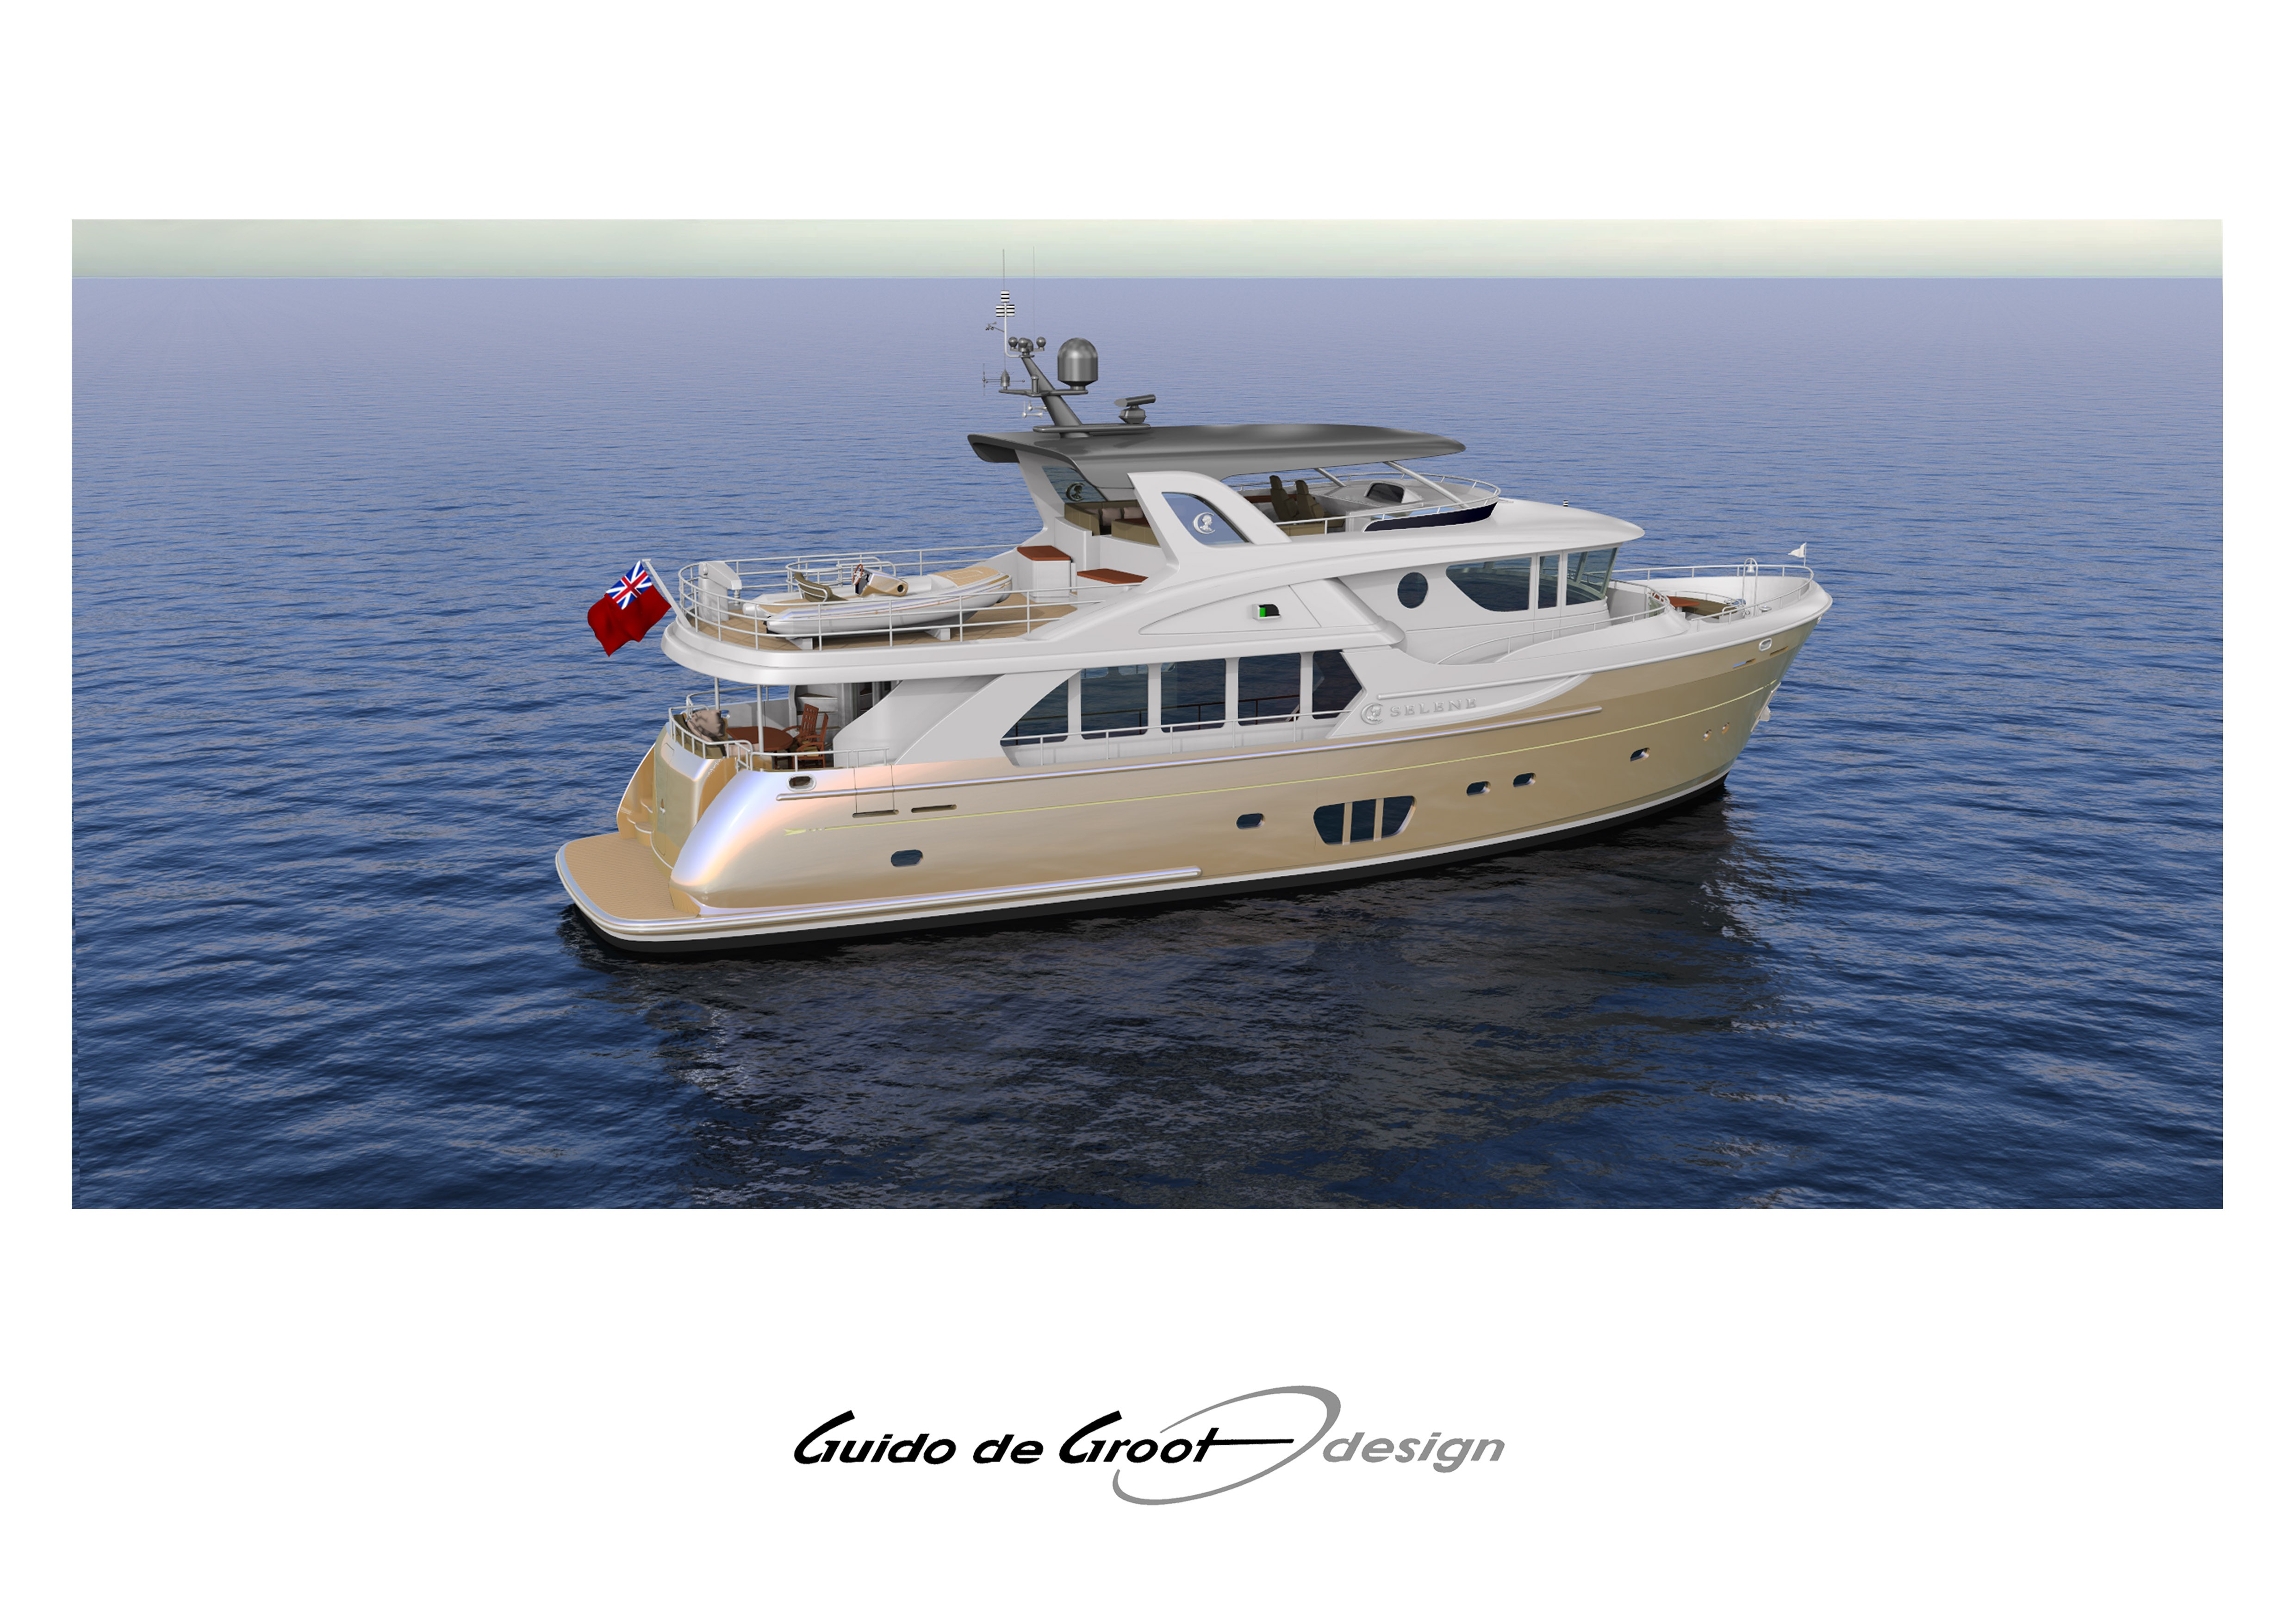 Calypso, Yacht d'exploration de l'océan, Ocean Explorer Yacht